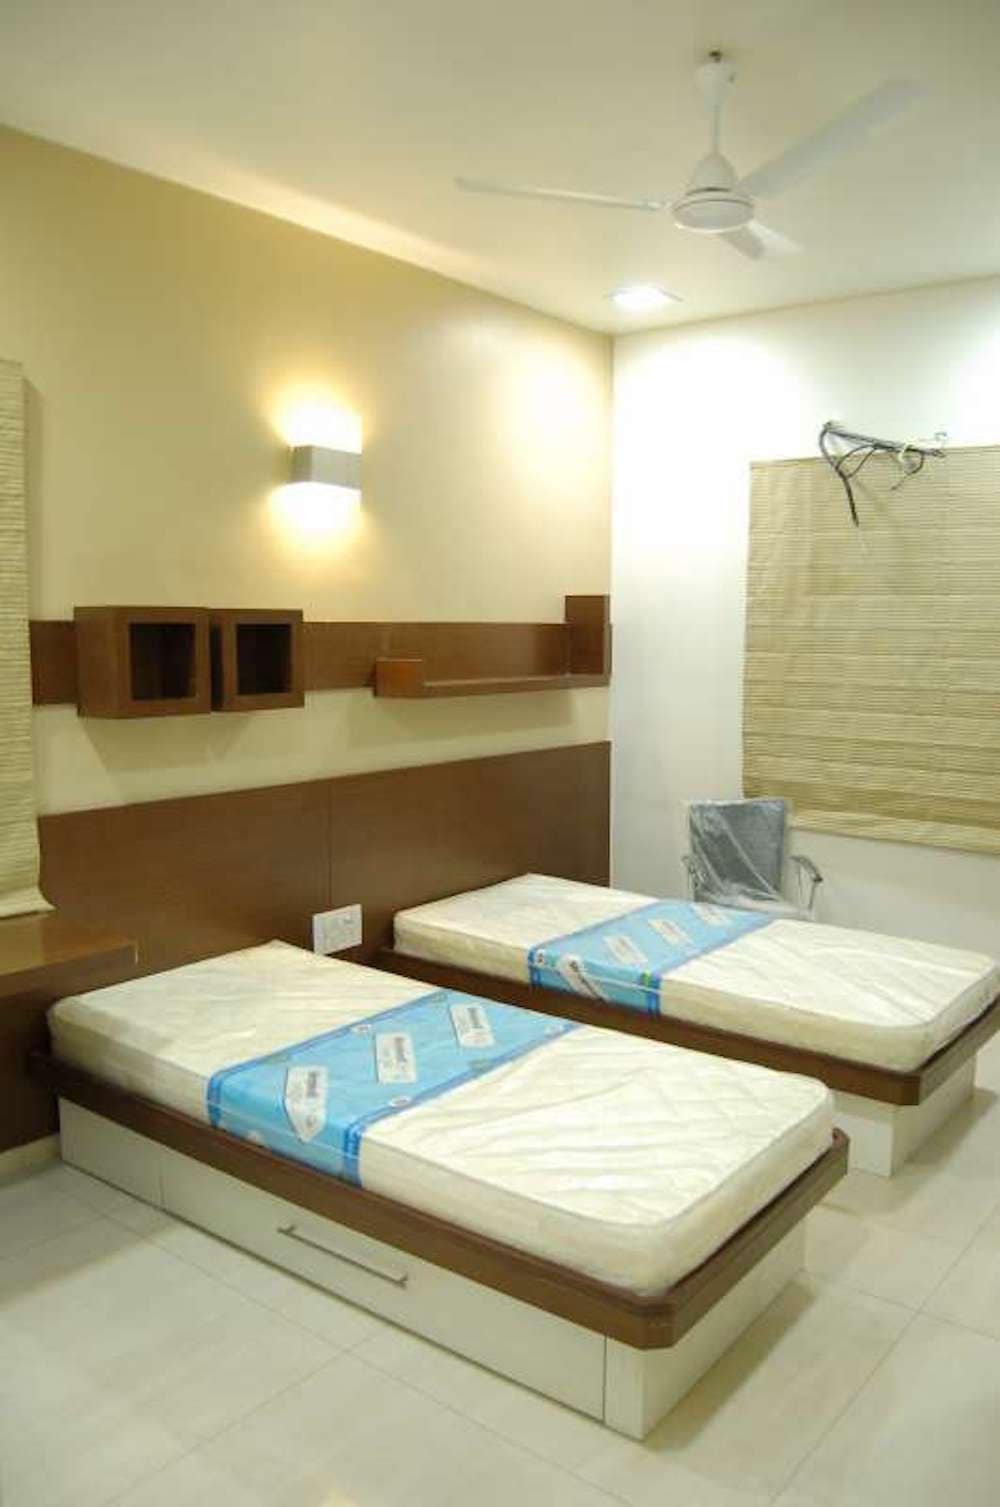 3 bed luxury apt in the heart of Alkapuri